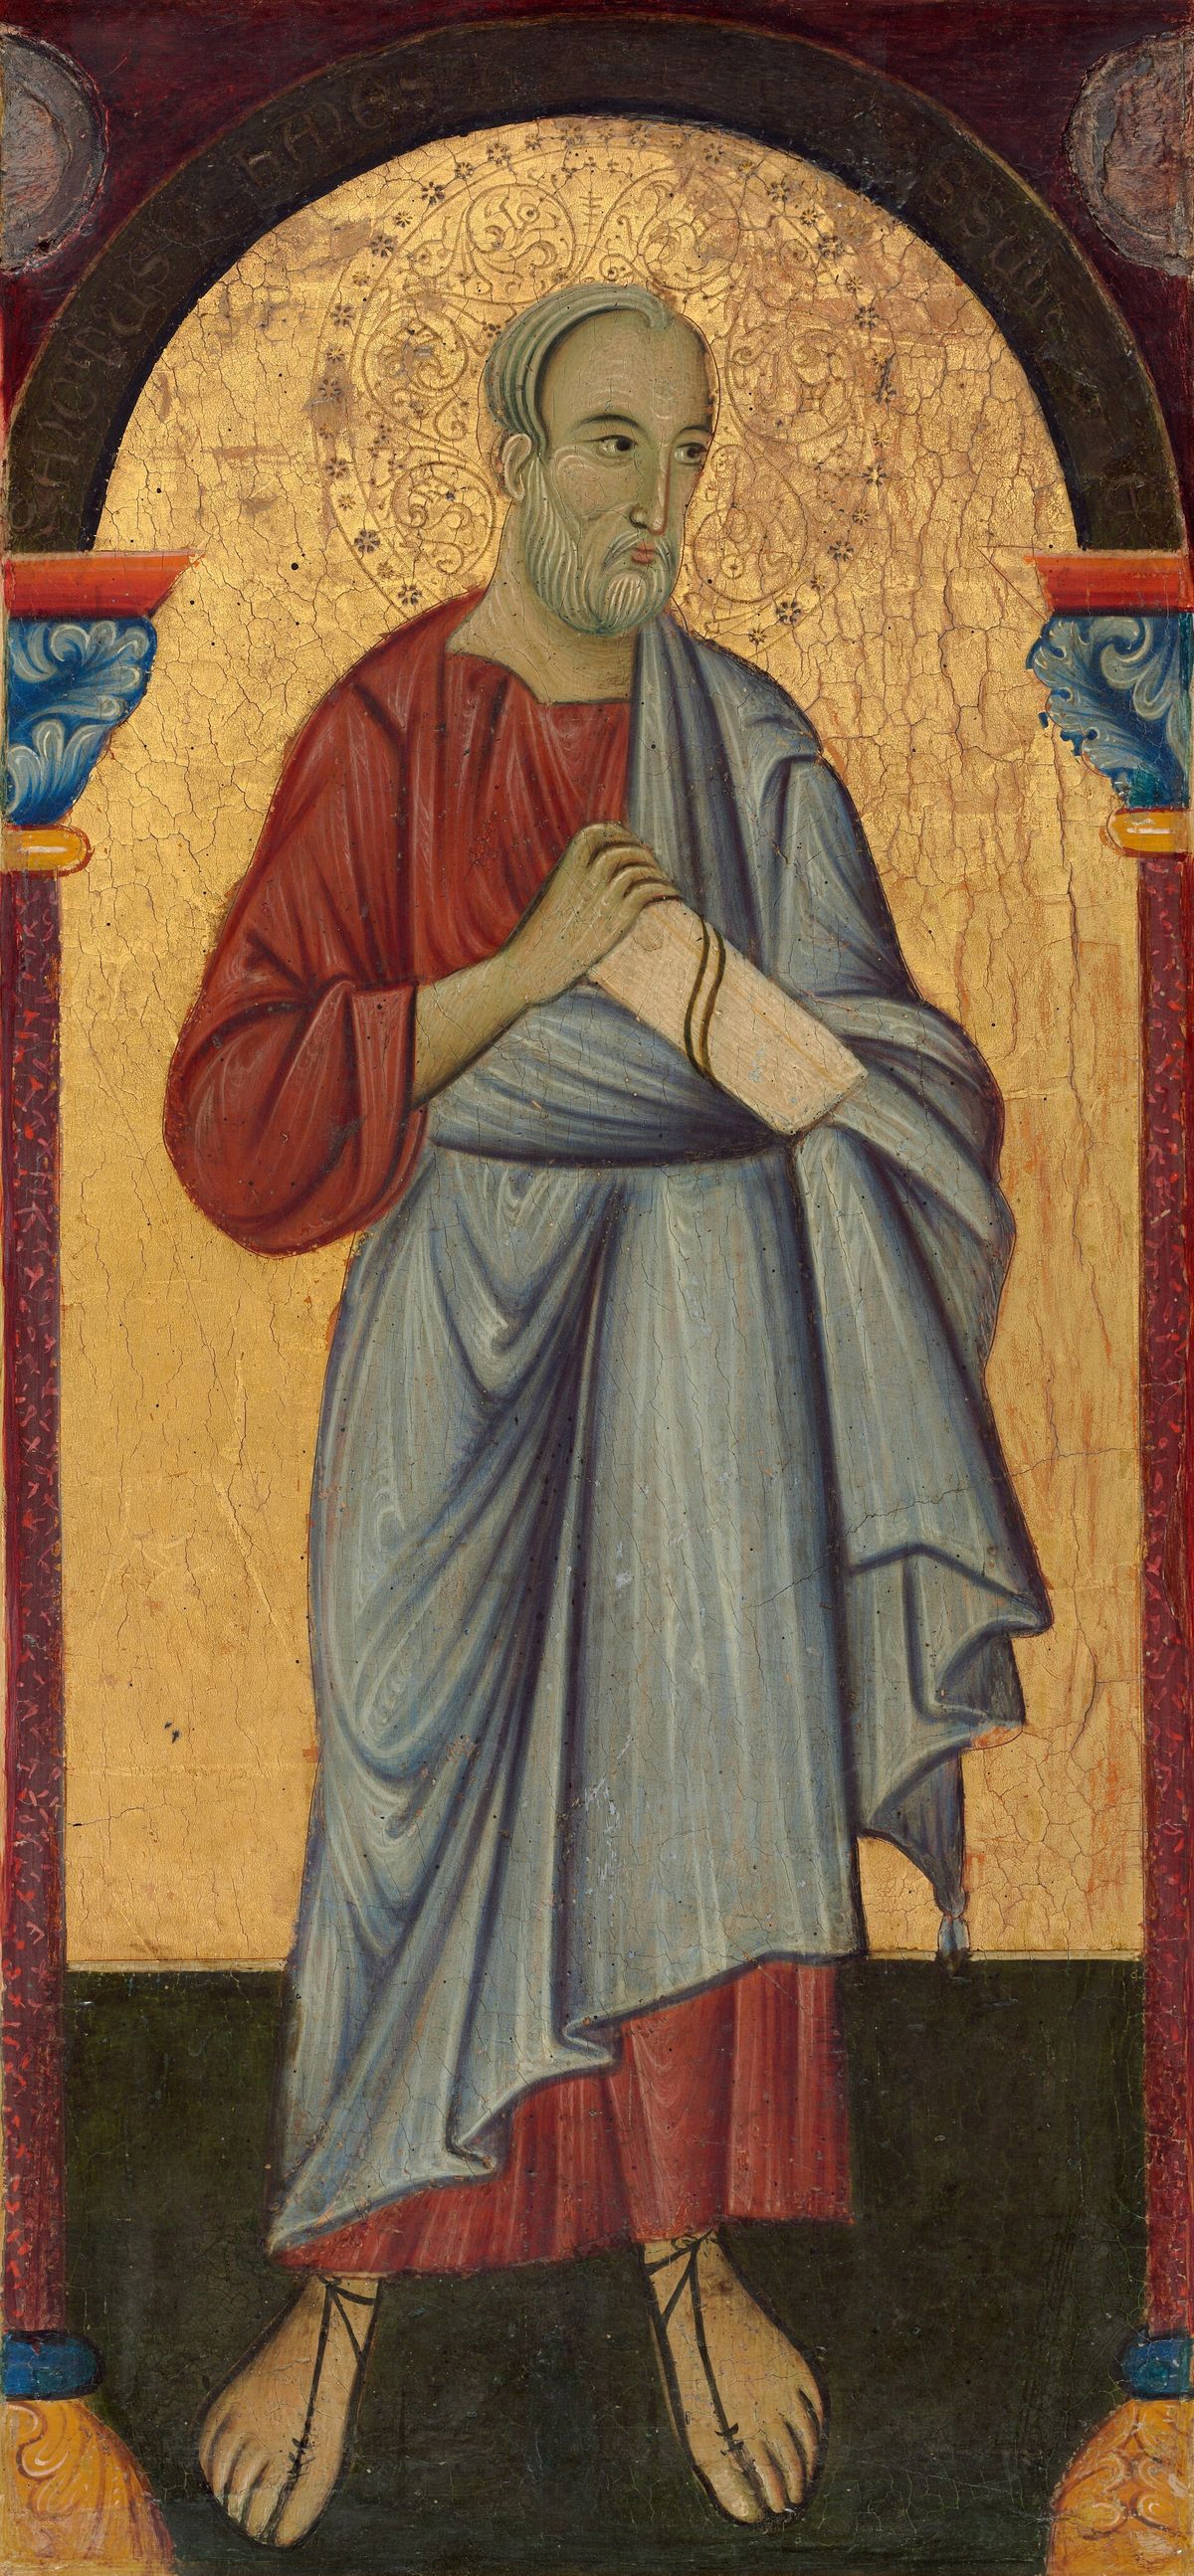 Saint John the Evangelist by Master of Saint Francis (1272) - Public Domain Catholic Painting